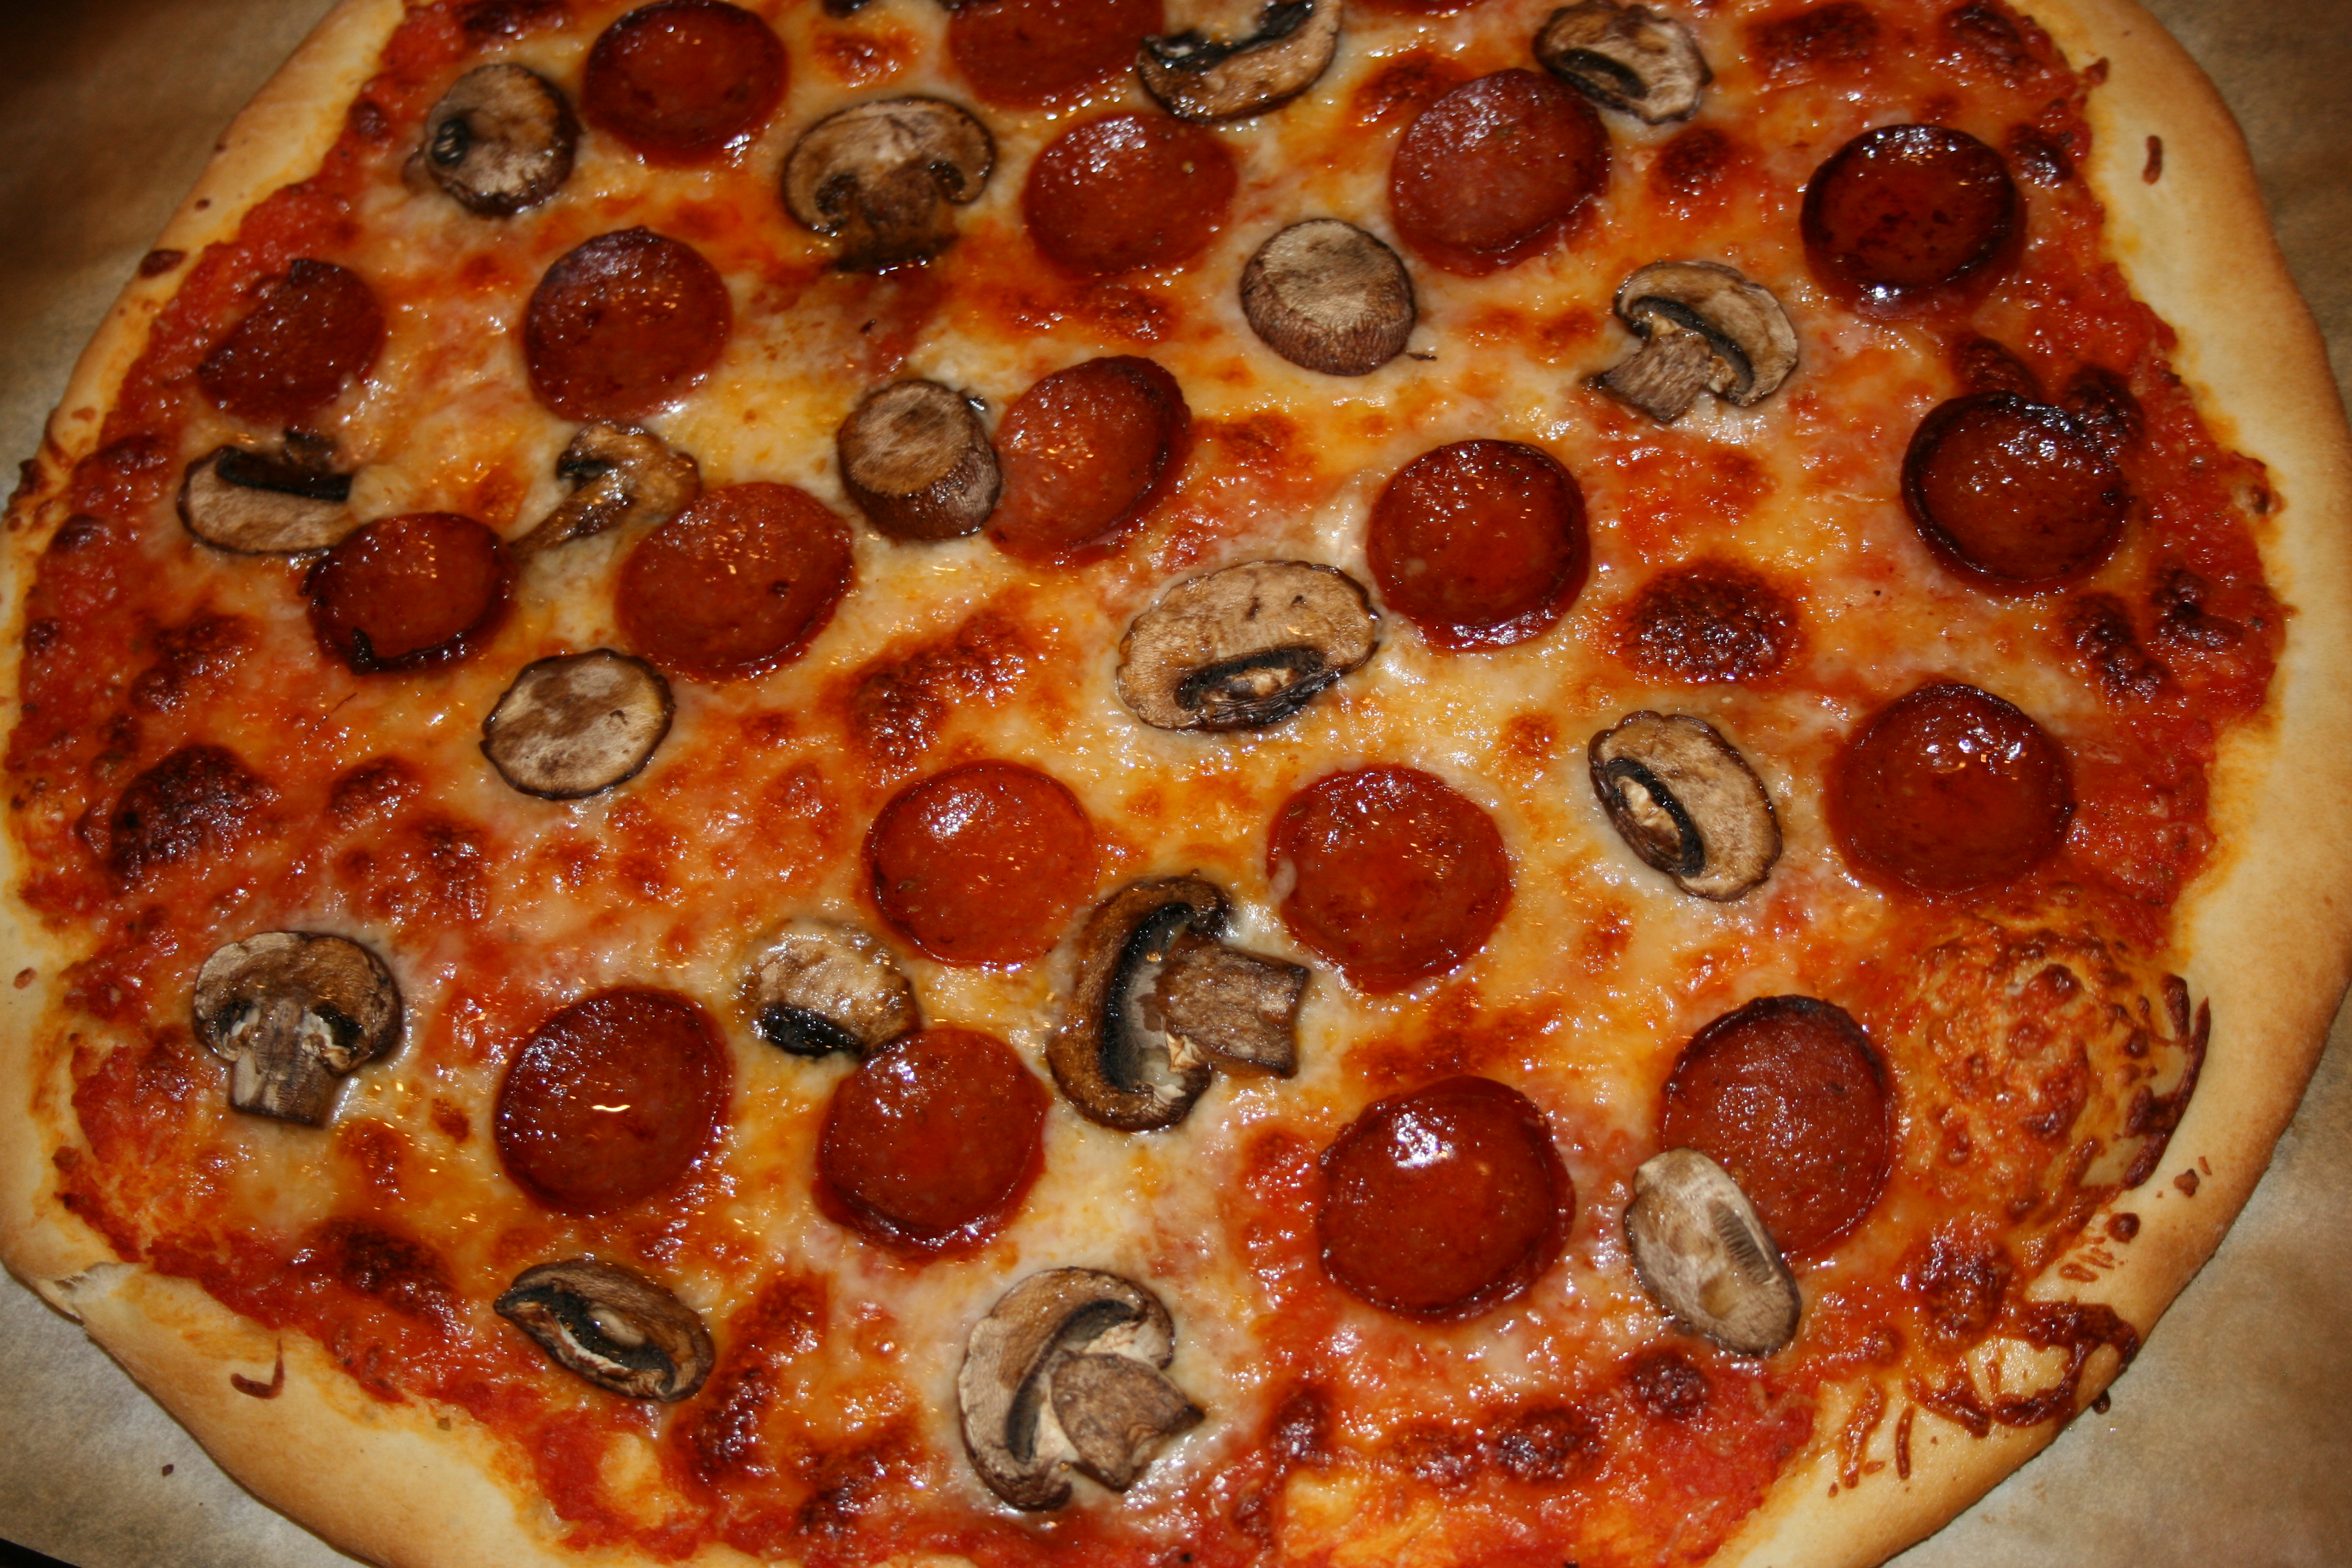 File:Pepperoni & mushroom pizza.jpg - Wikimedia Commons